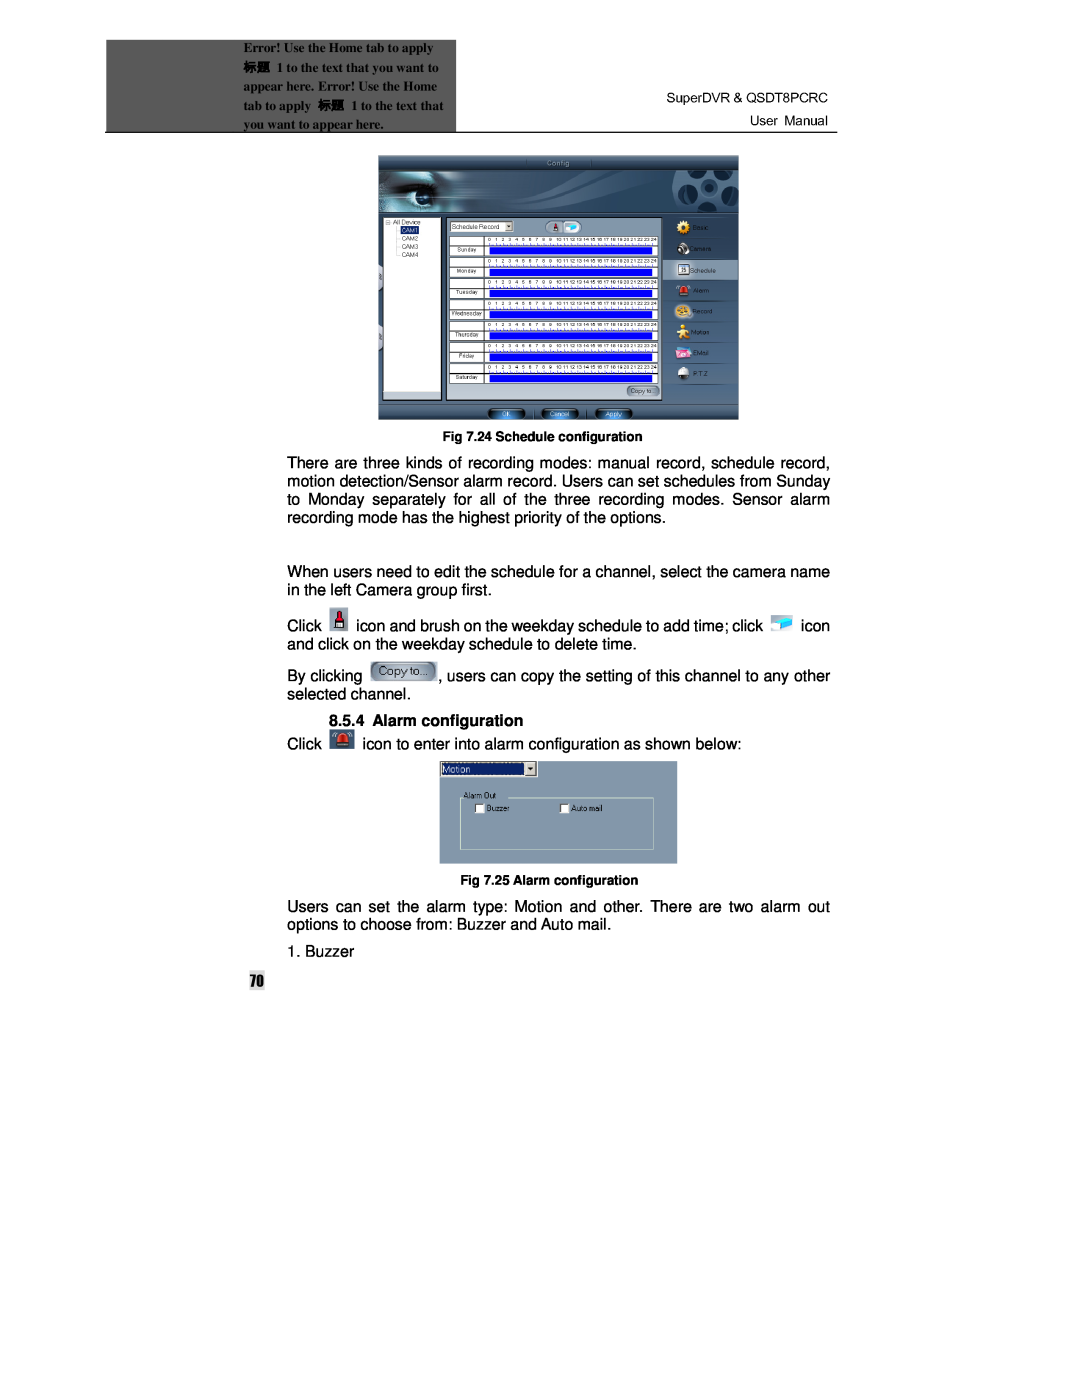 Q-See QSDT8PCRC manual 24 Schedule configuration, 25 Alarm configuration 